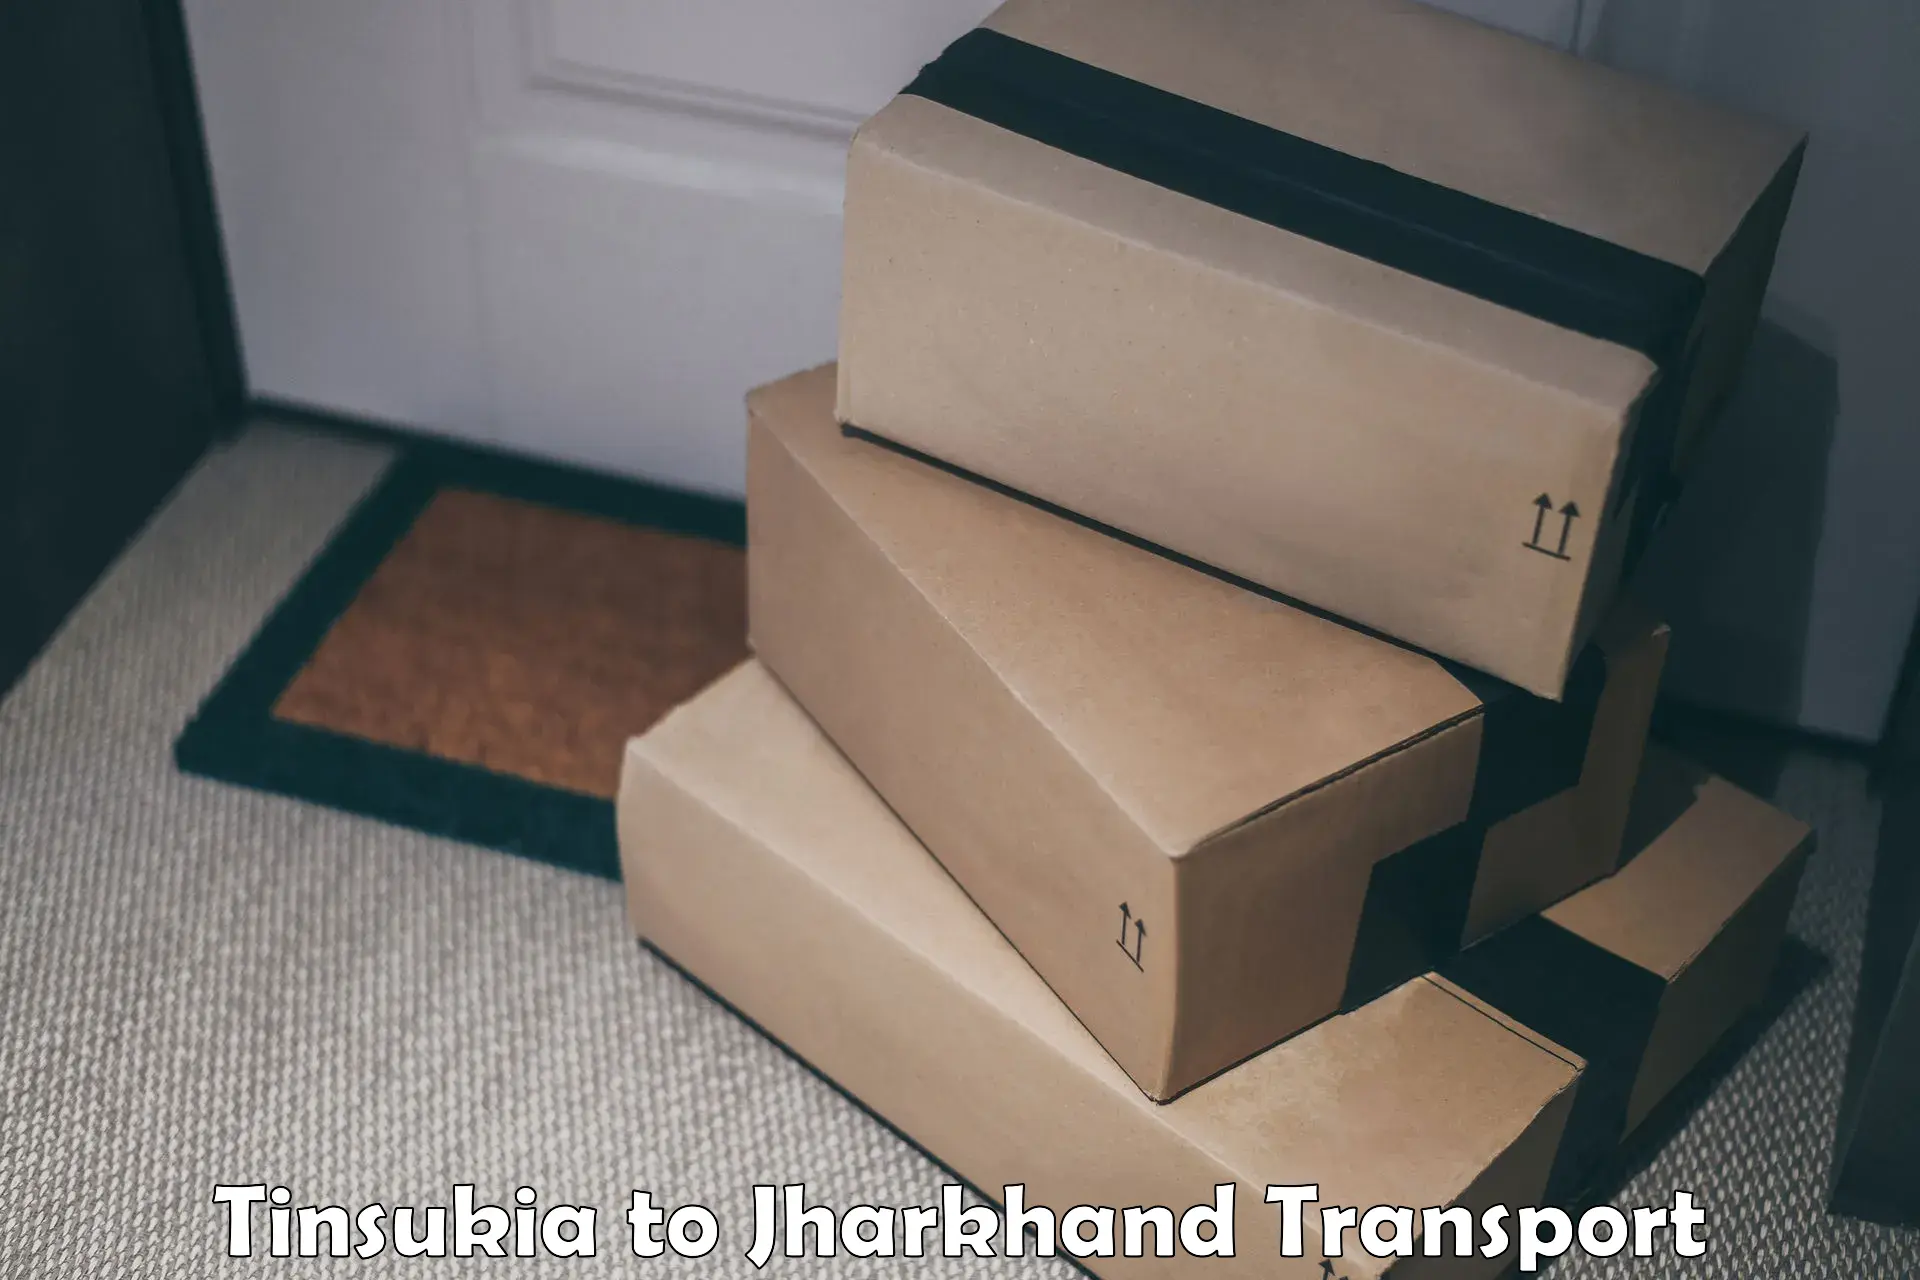 Goods delivery service Tinsukia to Simdega